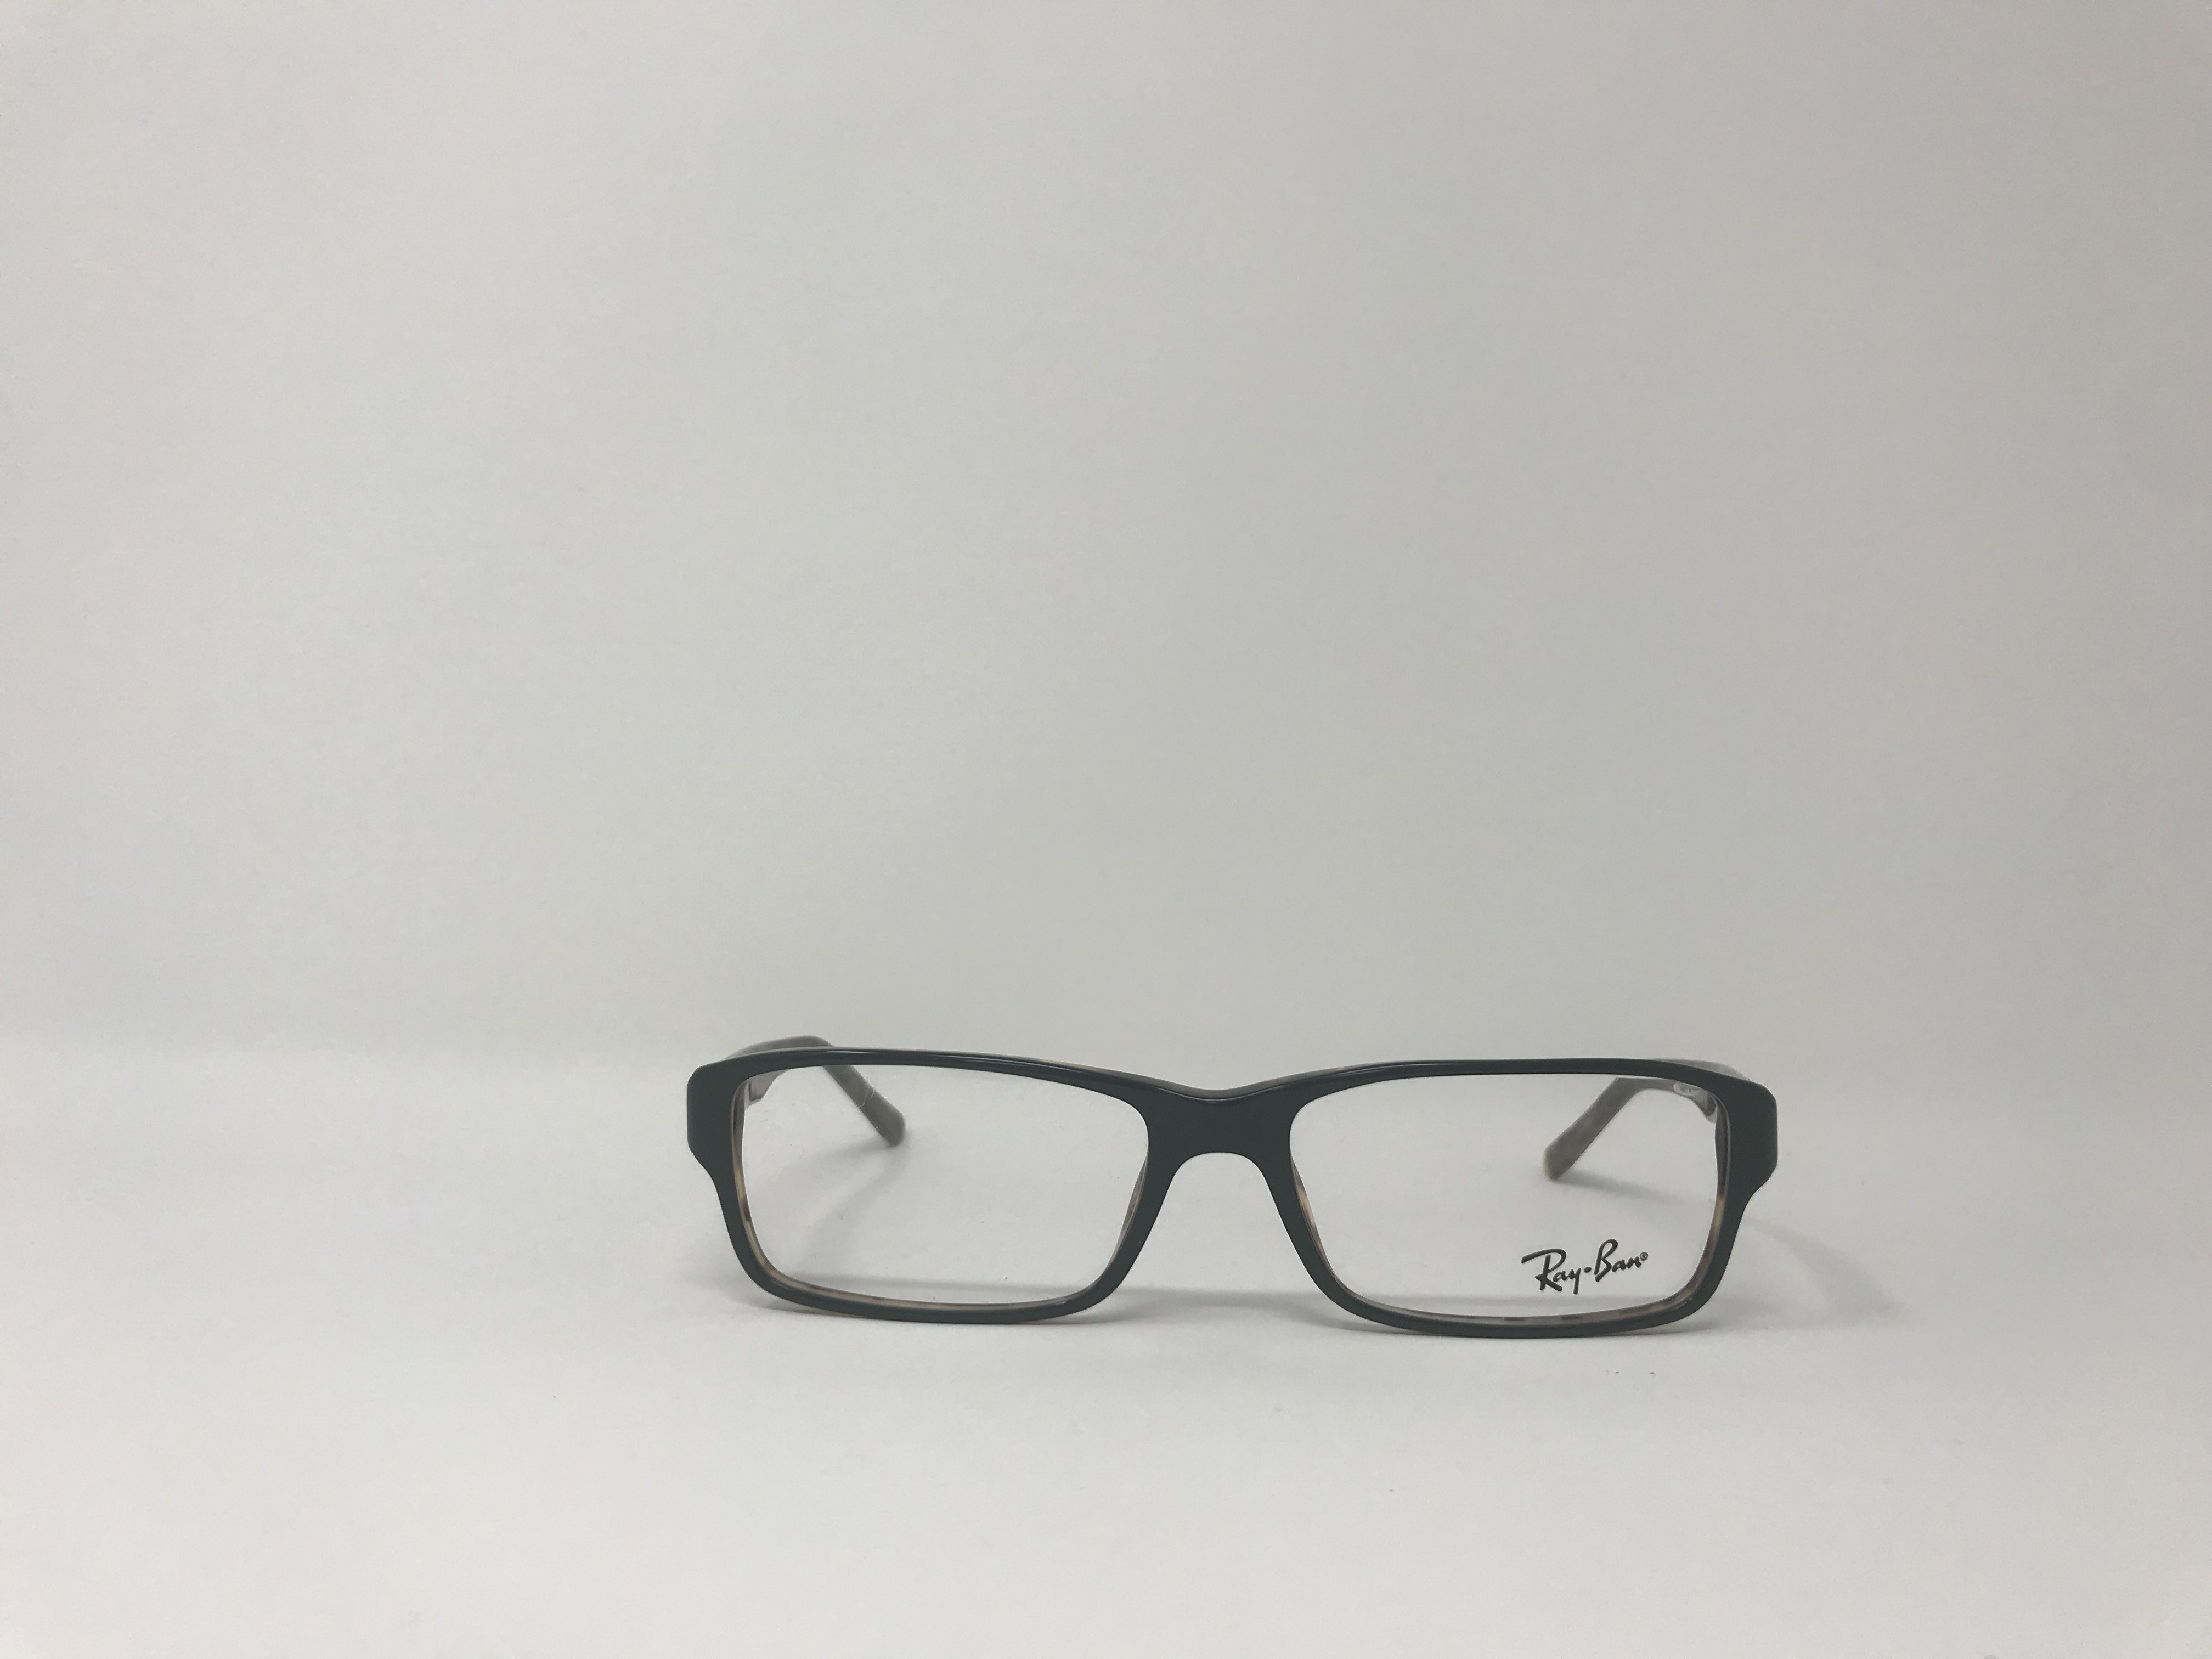 Ray Ban RB5169 Unisex eyeglasses